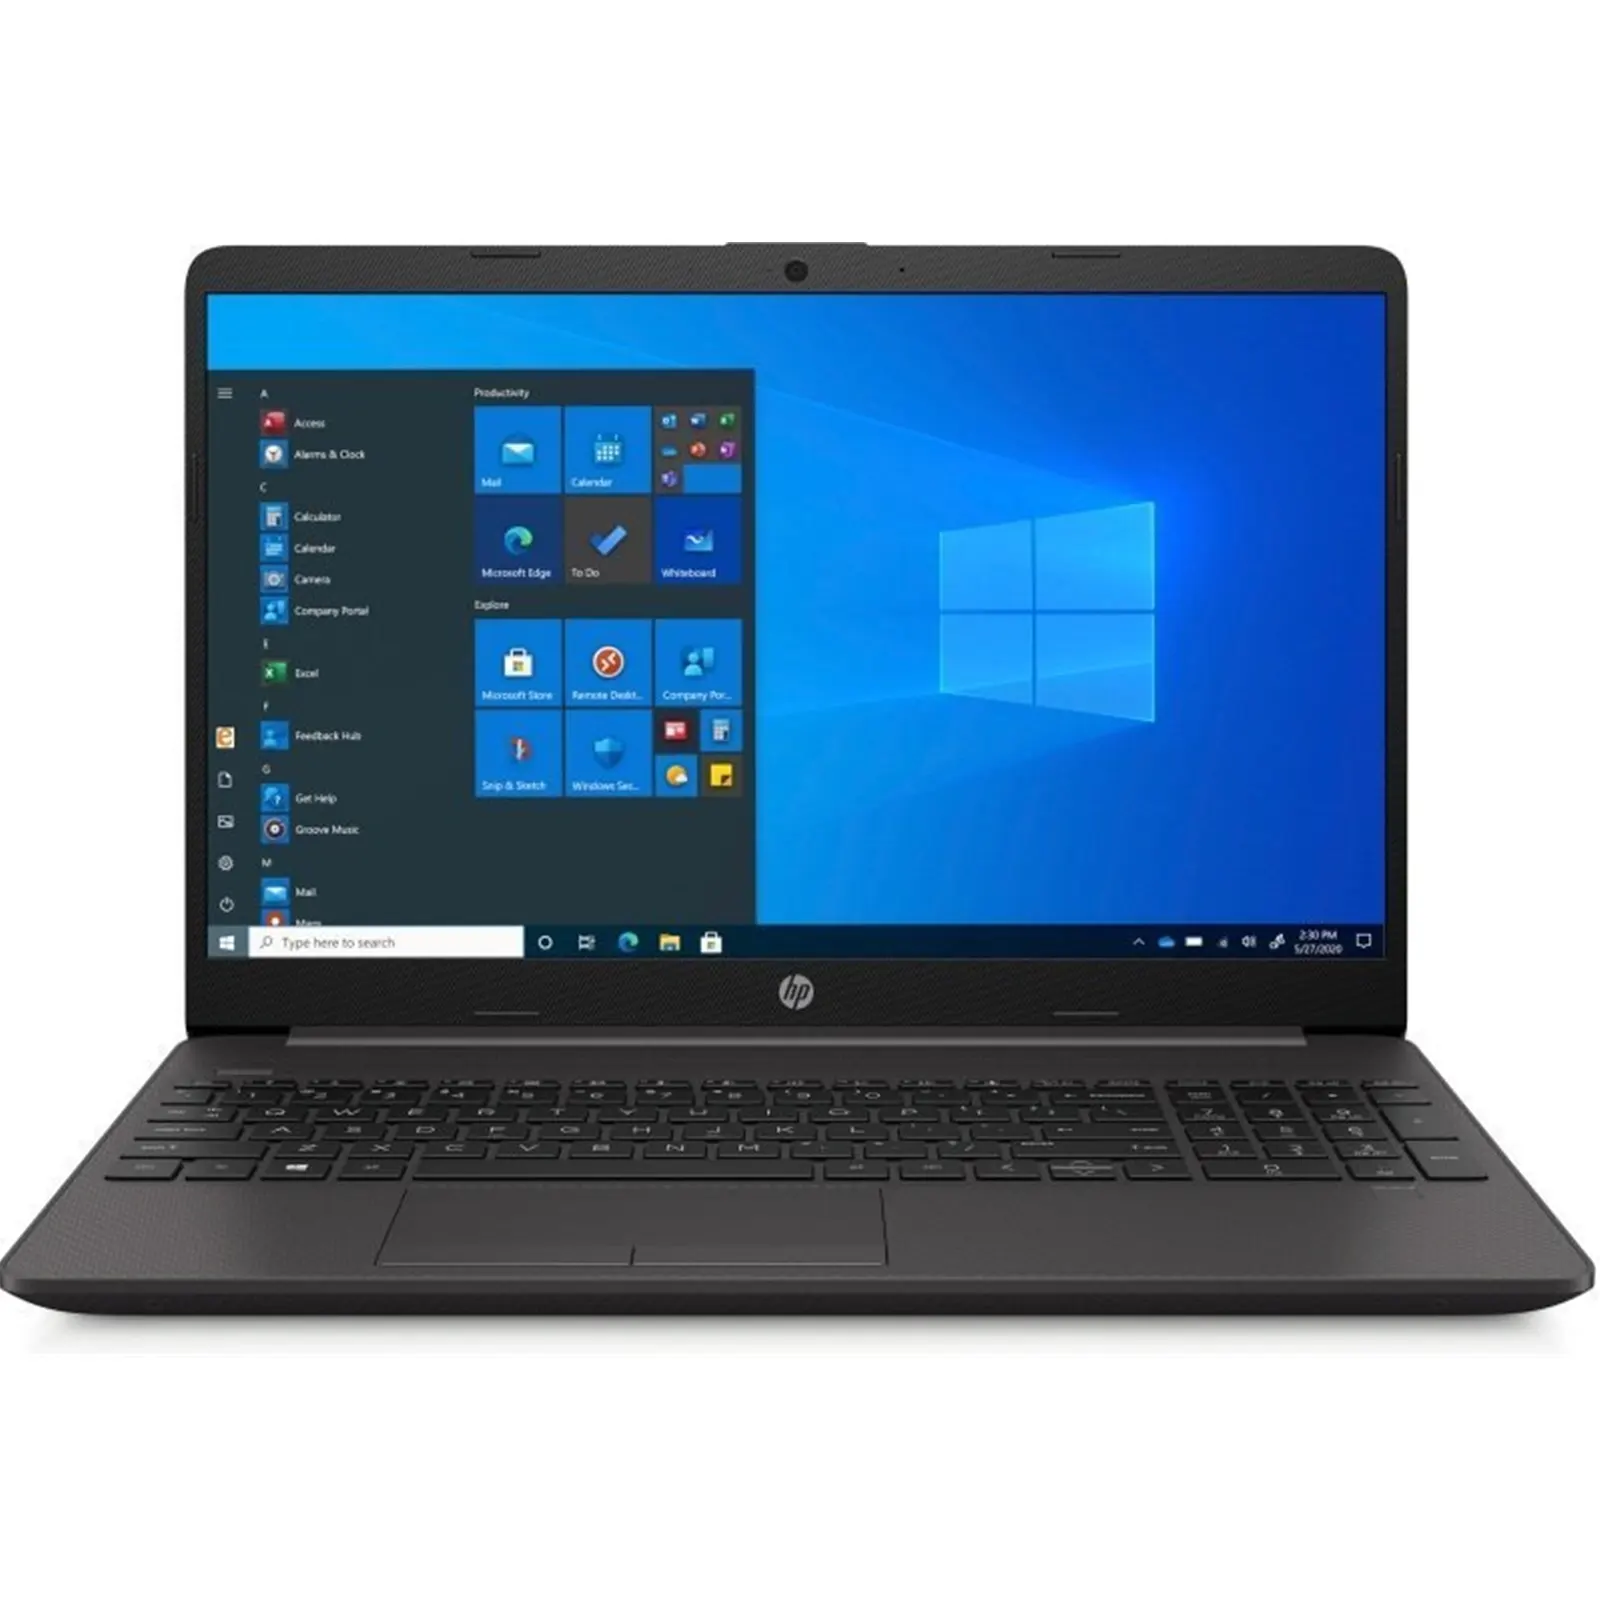 HP 250 G8 2M2Z9ES#ABU Laptop, 15.6 Inch Full HD 1080p Screen, Intel Core i3-1005G1 10th Gen, 8GB RAM, 128GB SSD, Windows10 Home